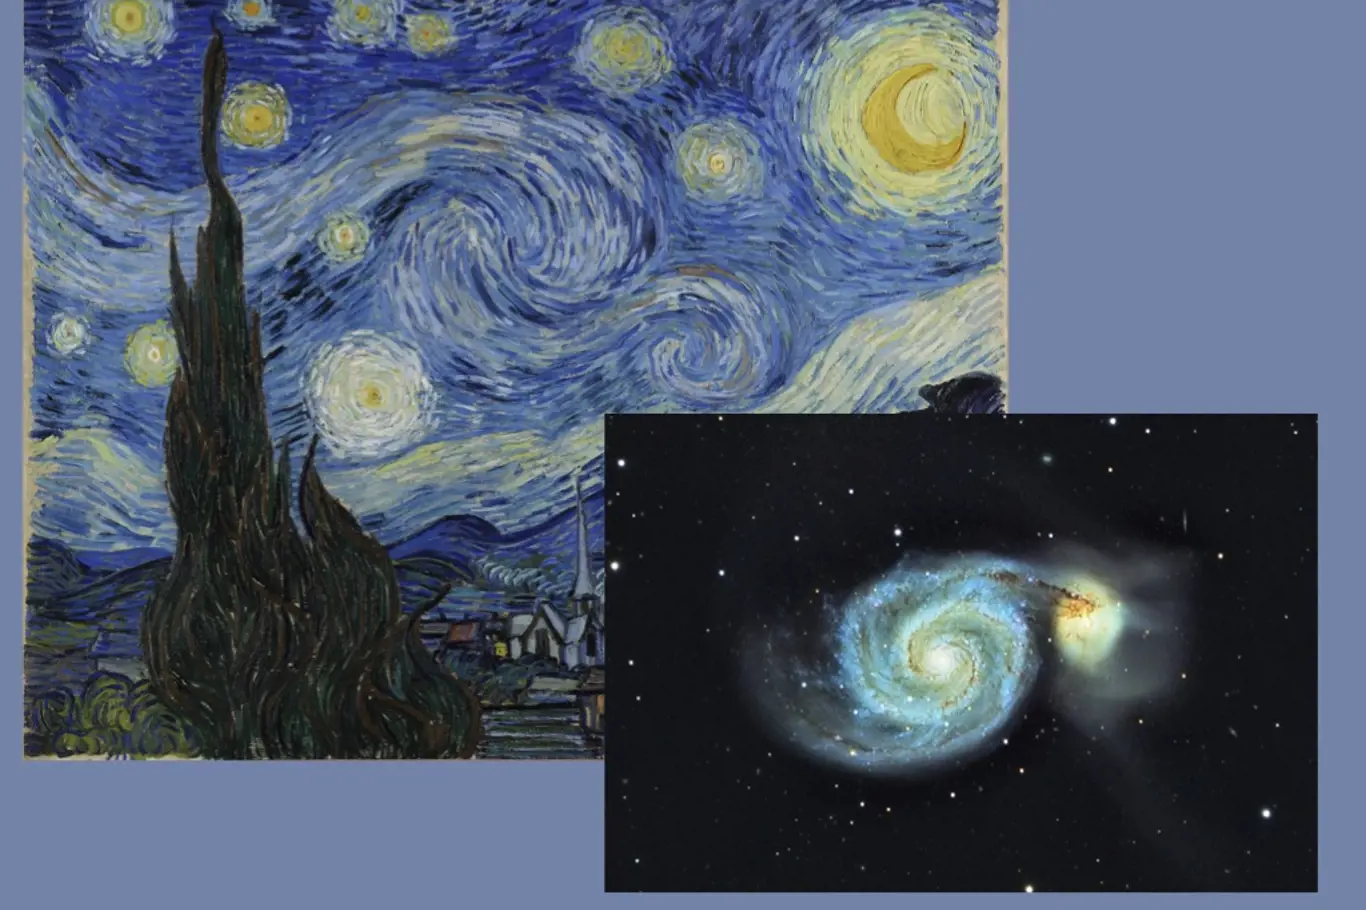 Van Goghův obraz v porovnání s realitou